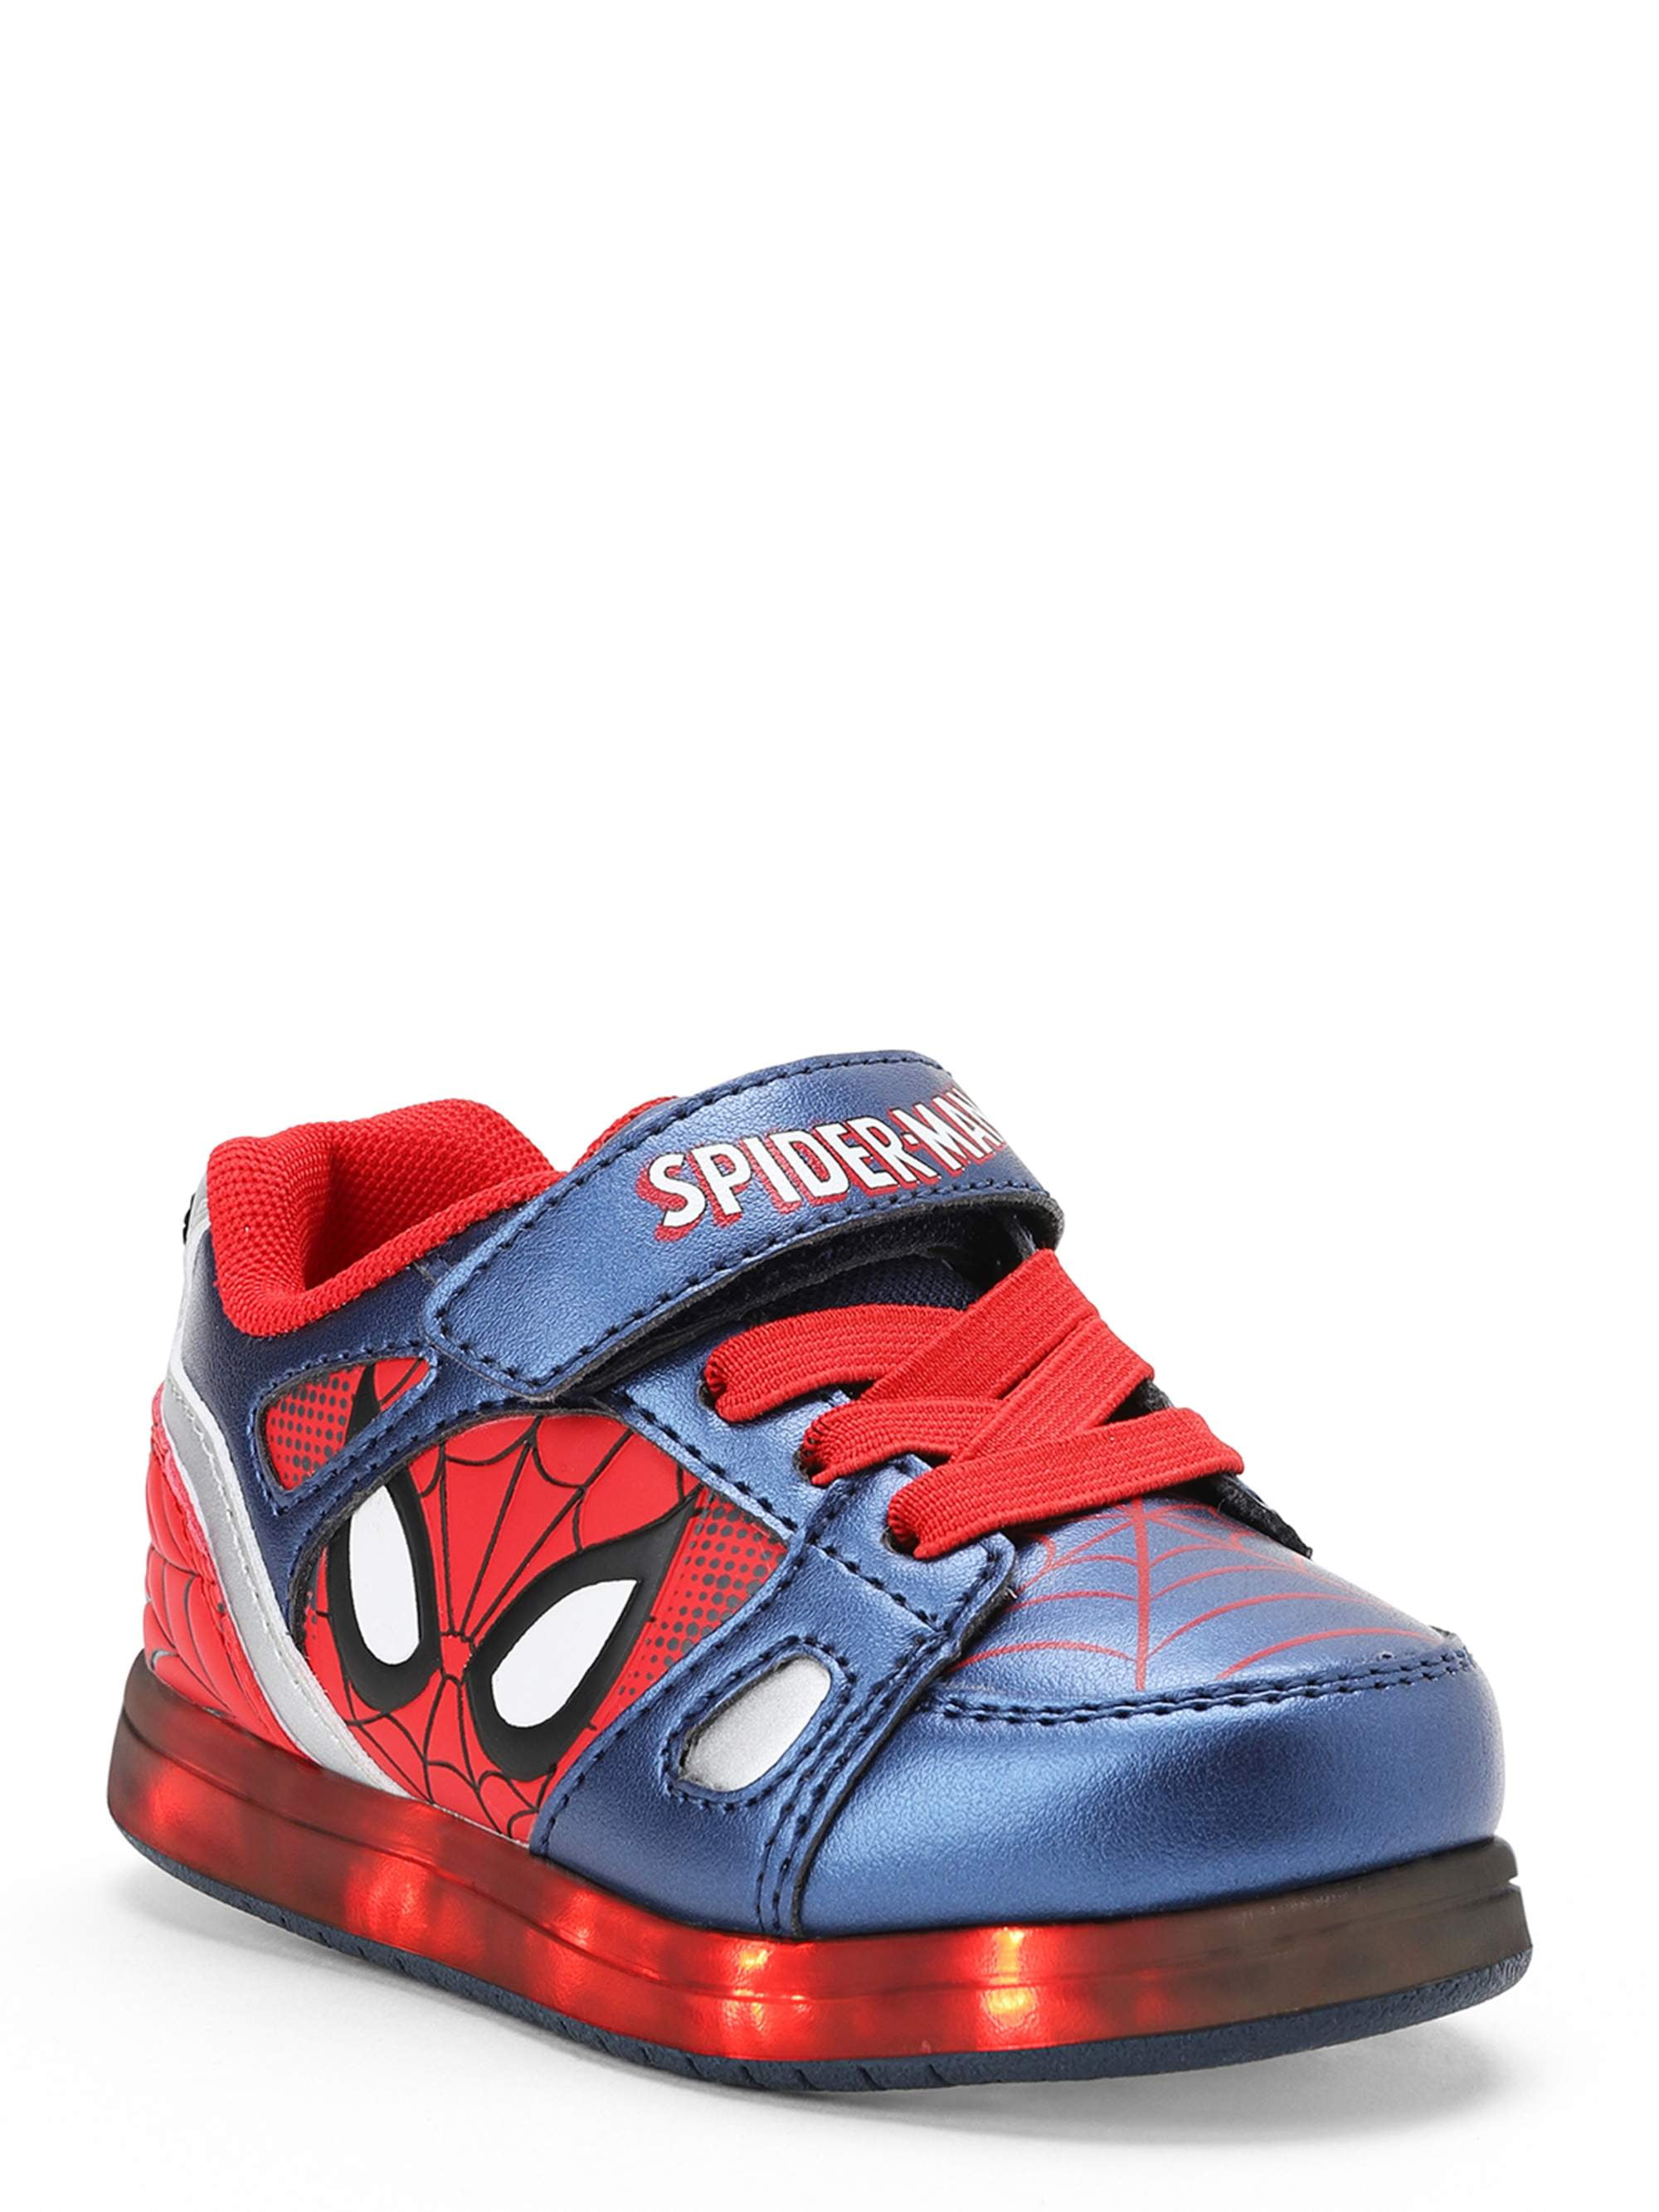 Spiderman Light Up Casual Sneaker (Toddler Boys) Walmart